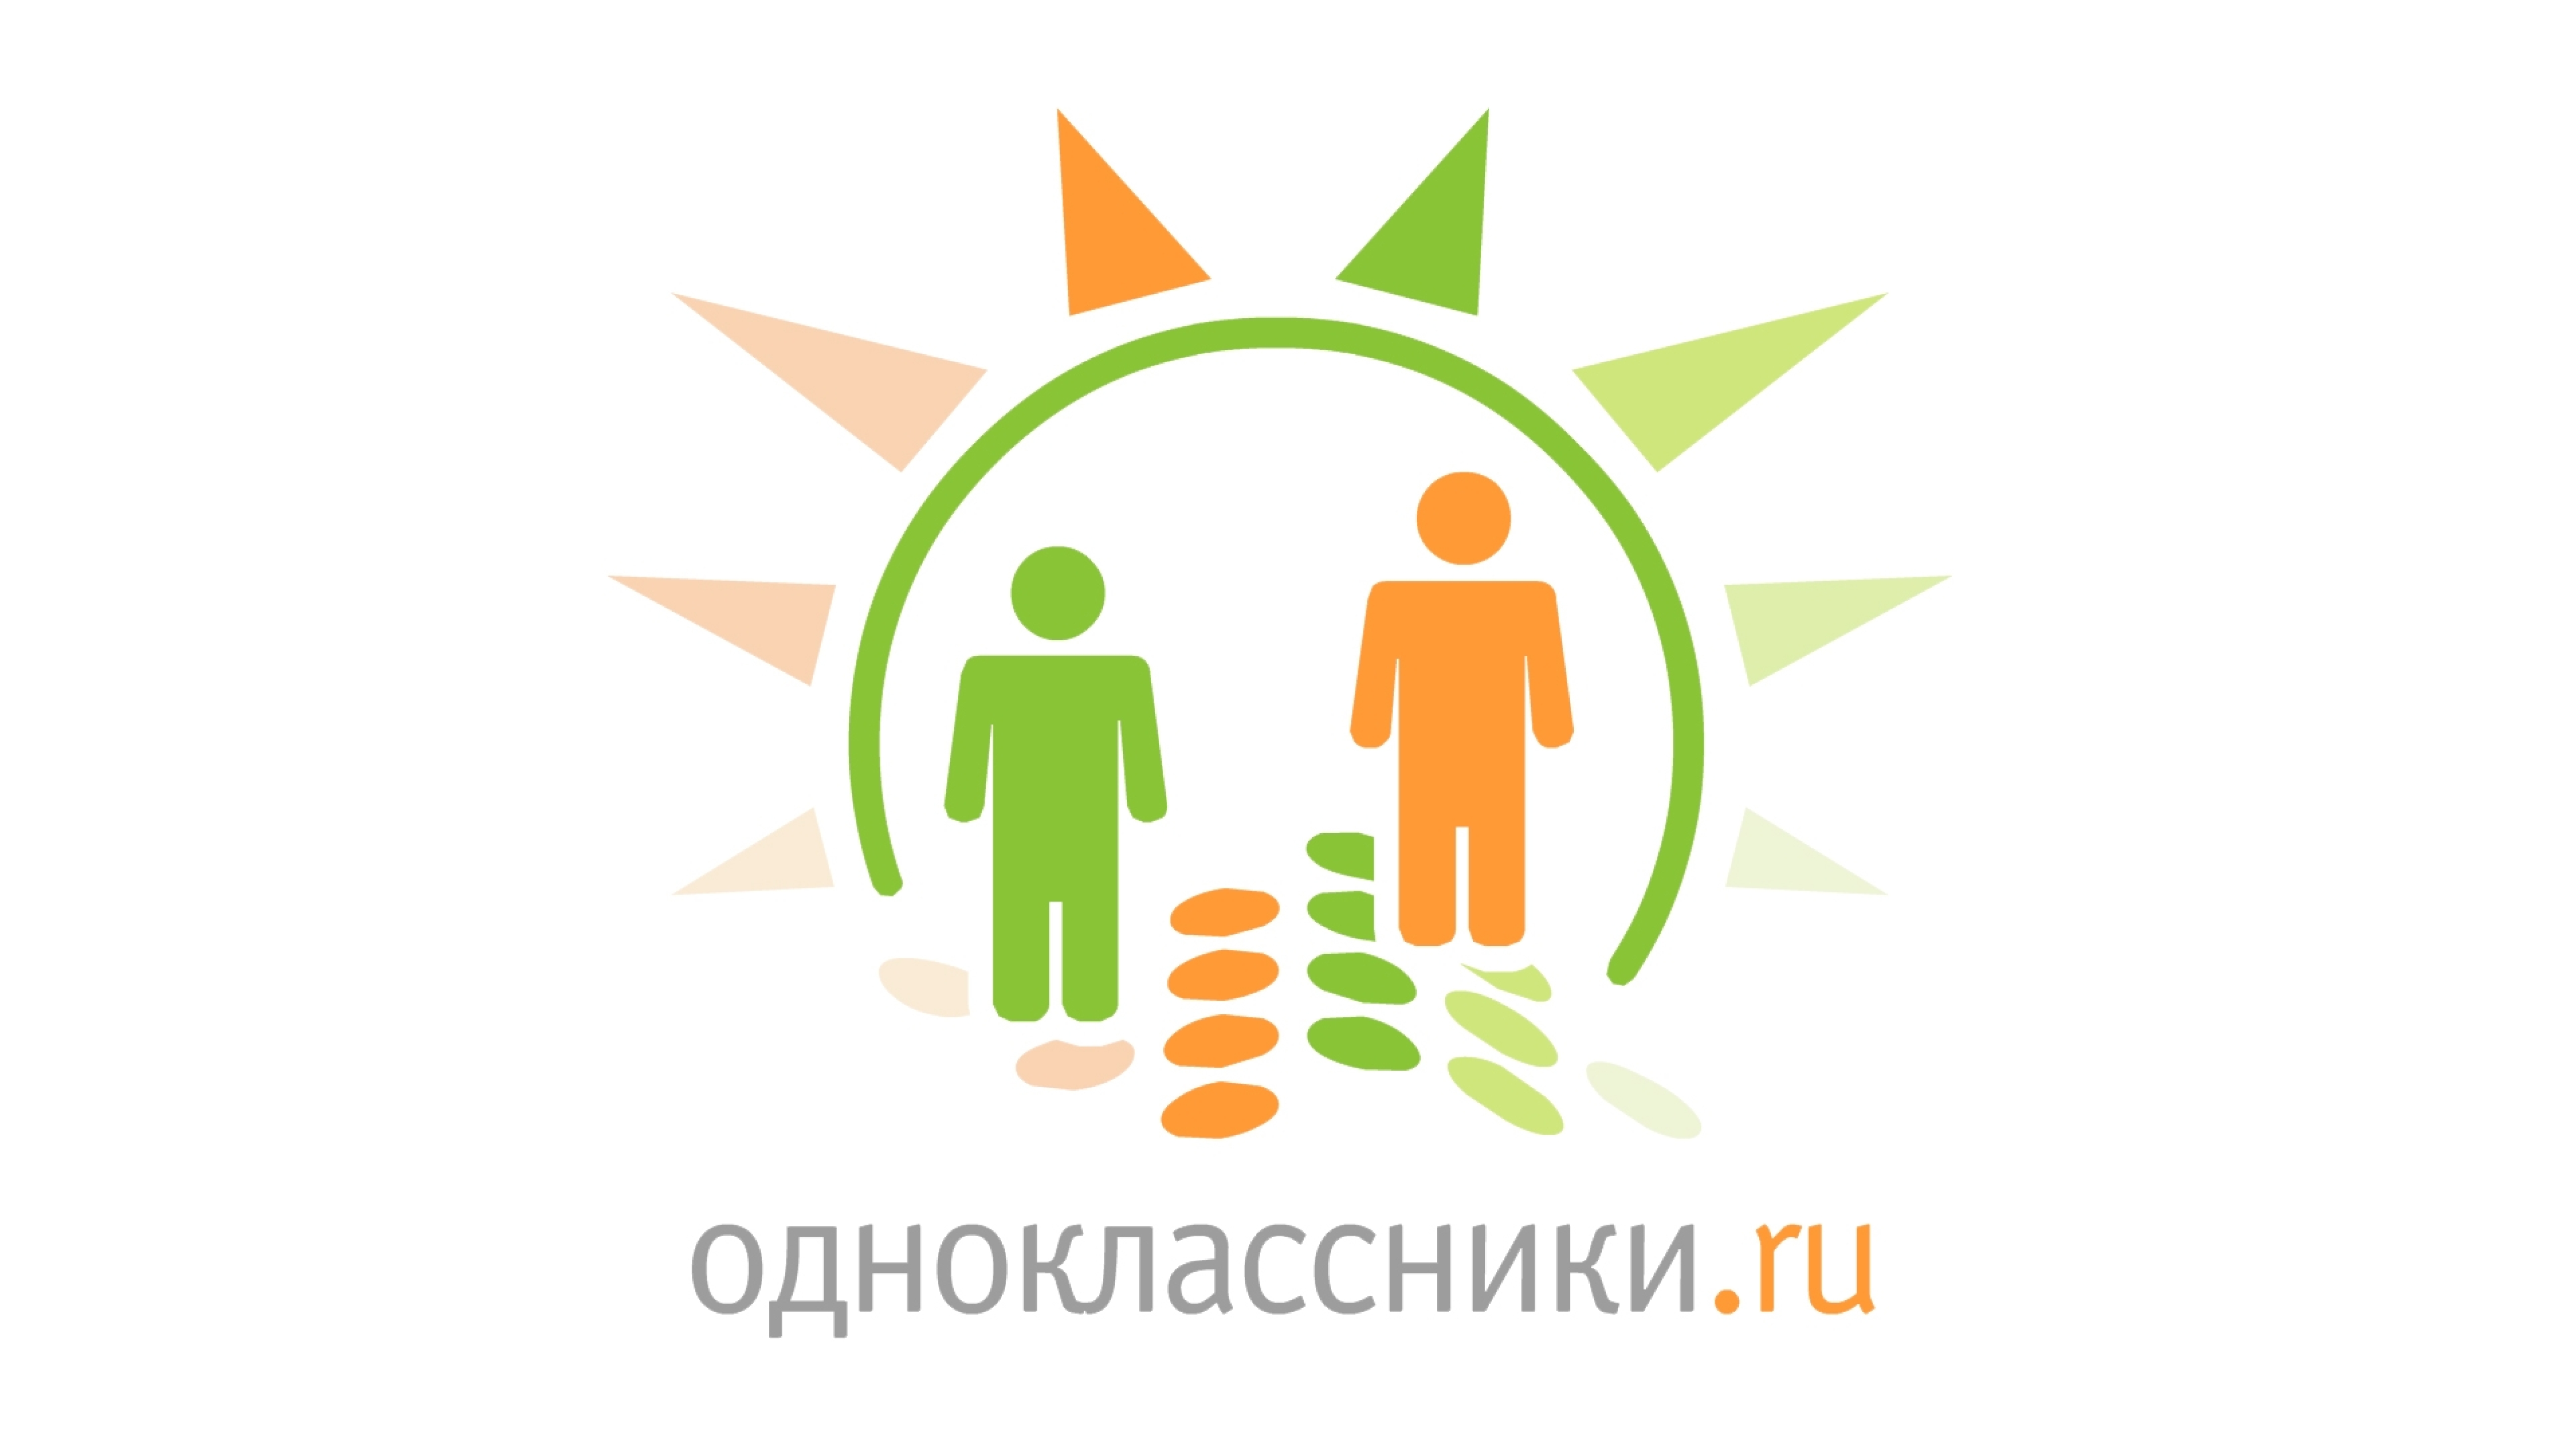 0 одноклассники ру. Odnoklassniki. Одноклассники старый логотип. Сеть Одноклассники. 20% Одноклассники.